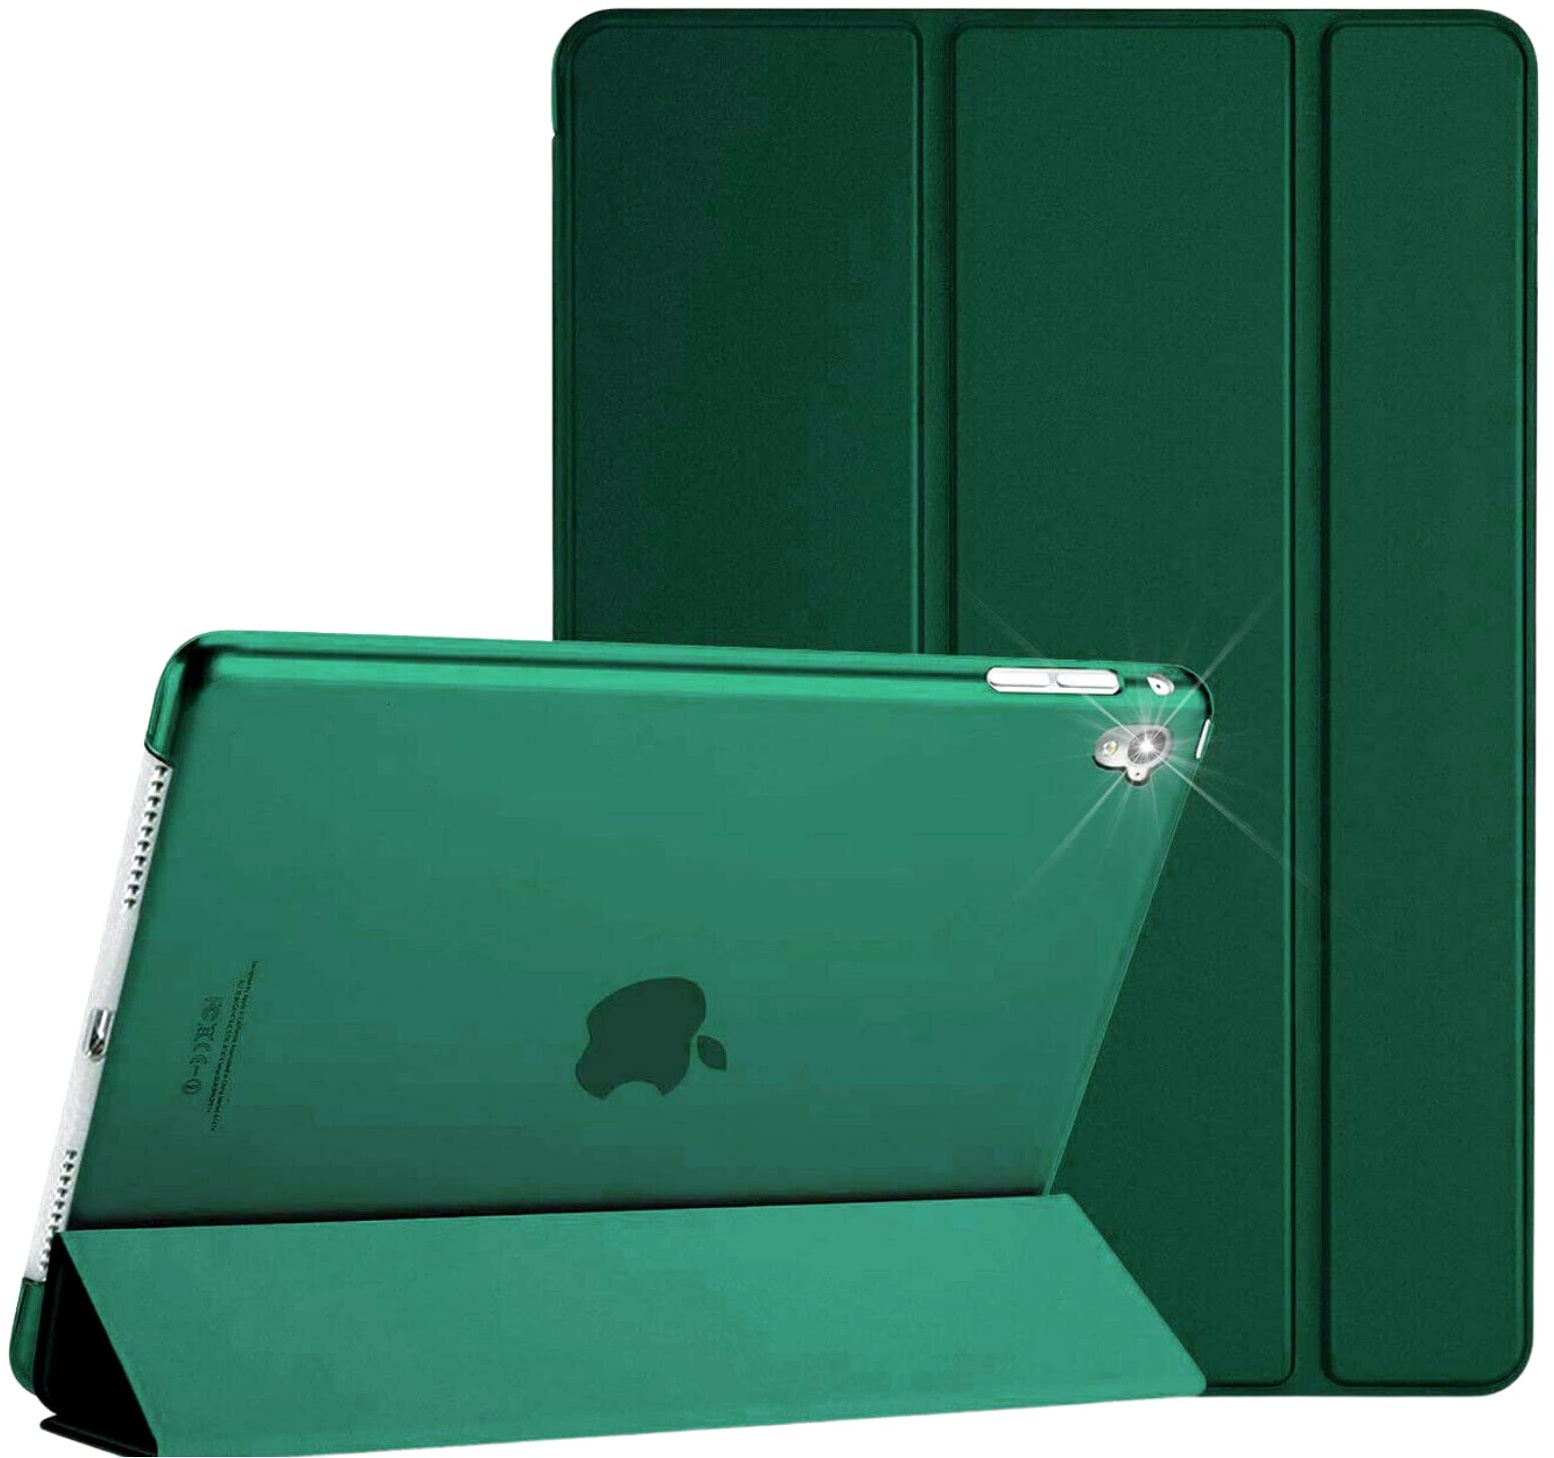 Schutzhülle für Apple iPad Mini 4 / Mini 5 Generation, magnetisch, Leder, passend für Modell-Nr. A1538 A1550 A2133 A2124 A2125 A2126, Smaragdgrün